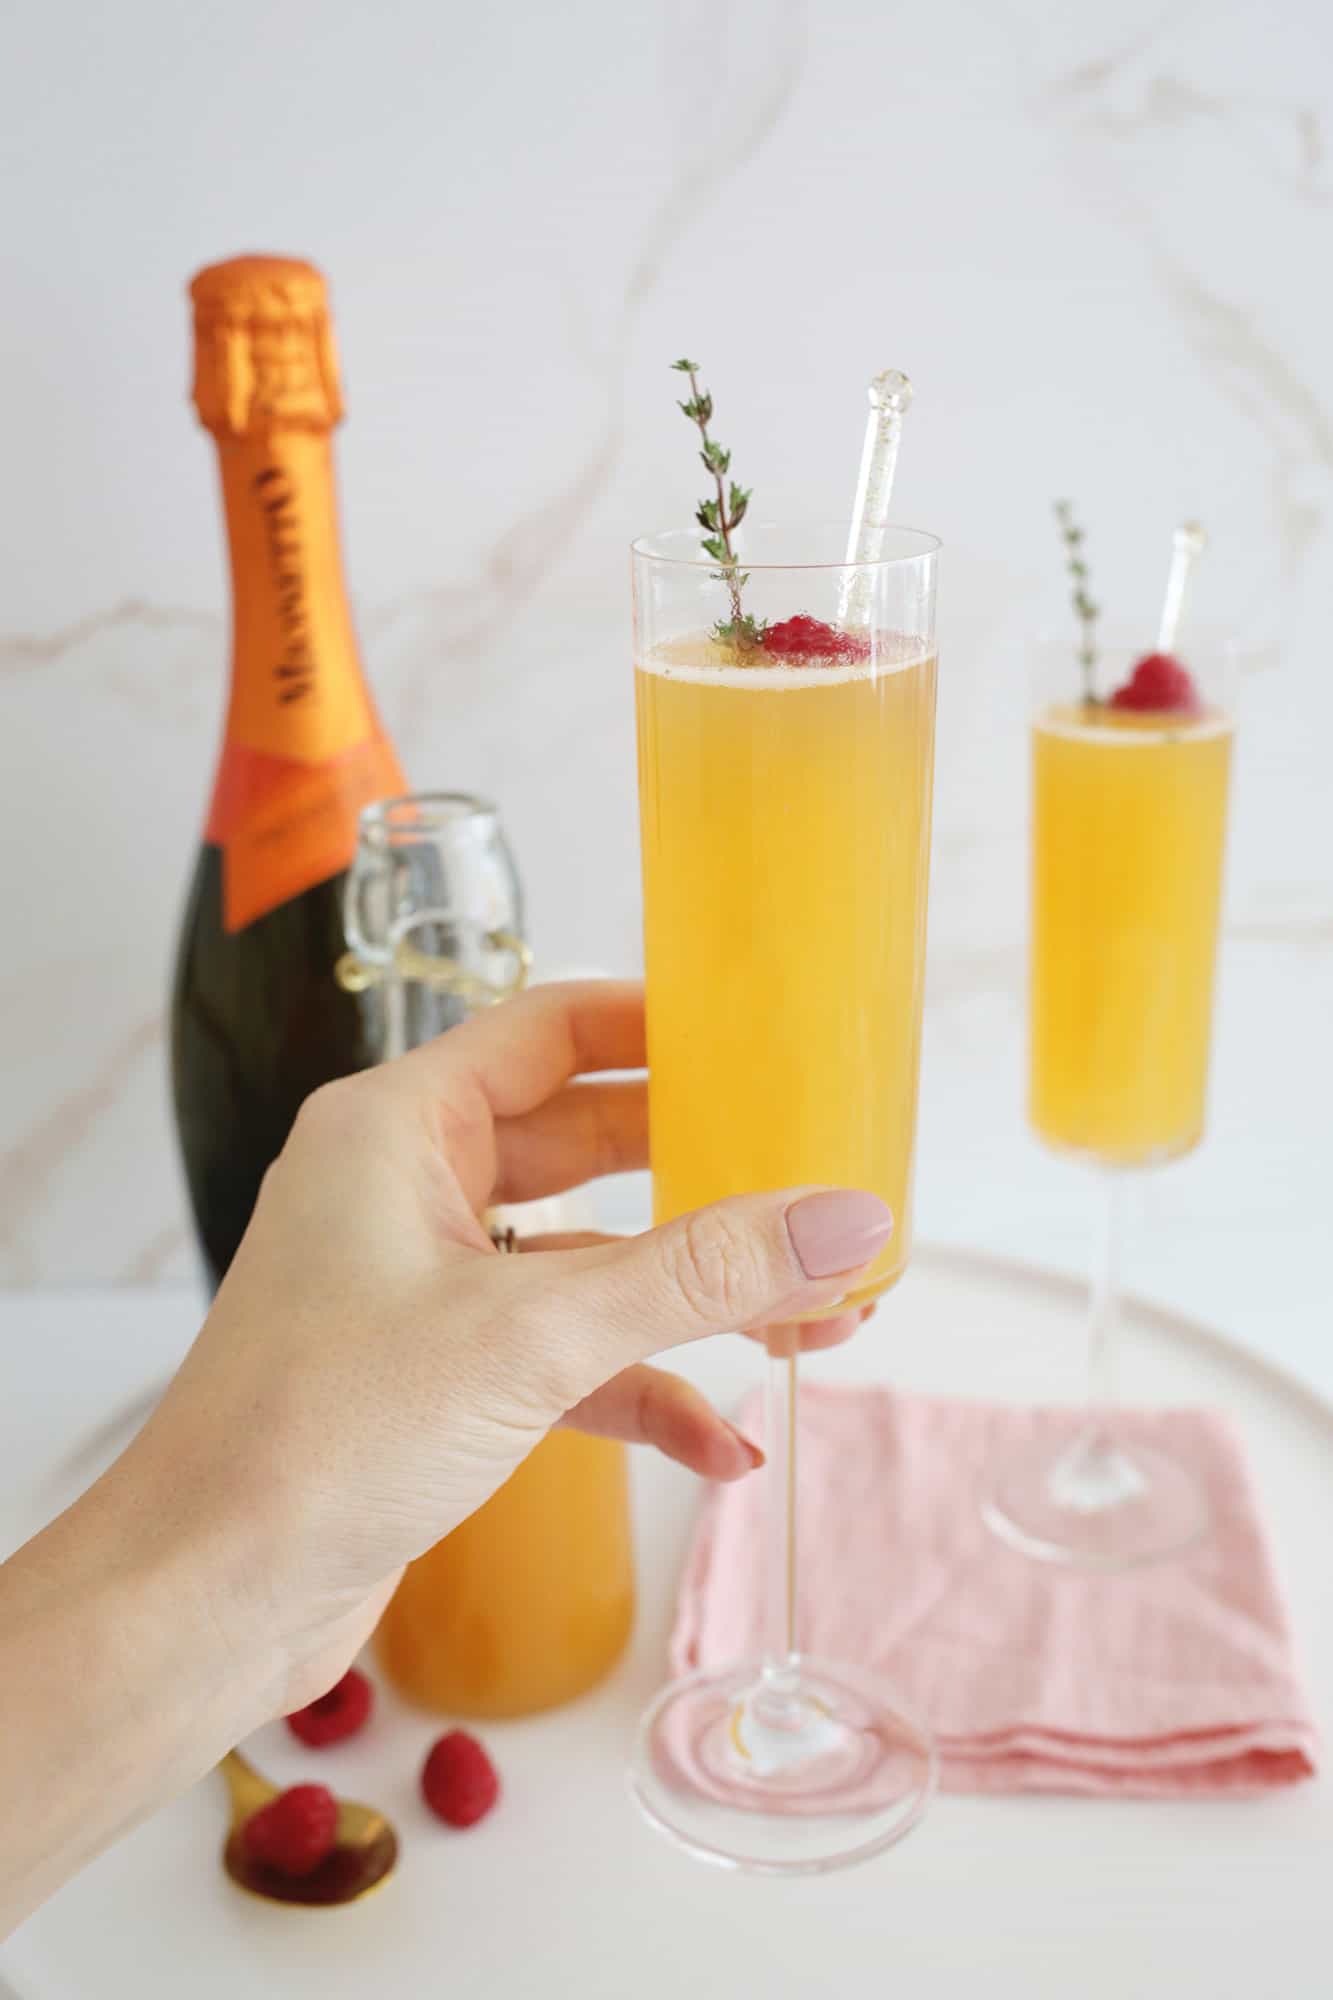 Classic Peach Bellini cocktail